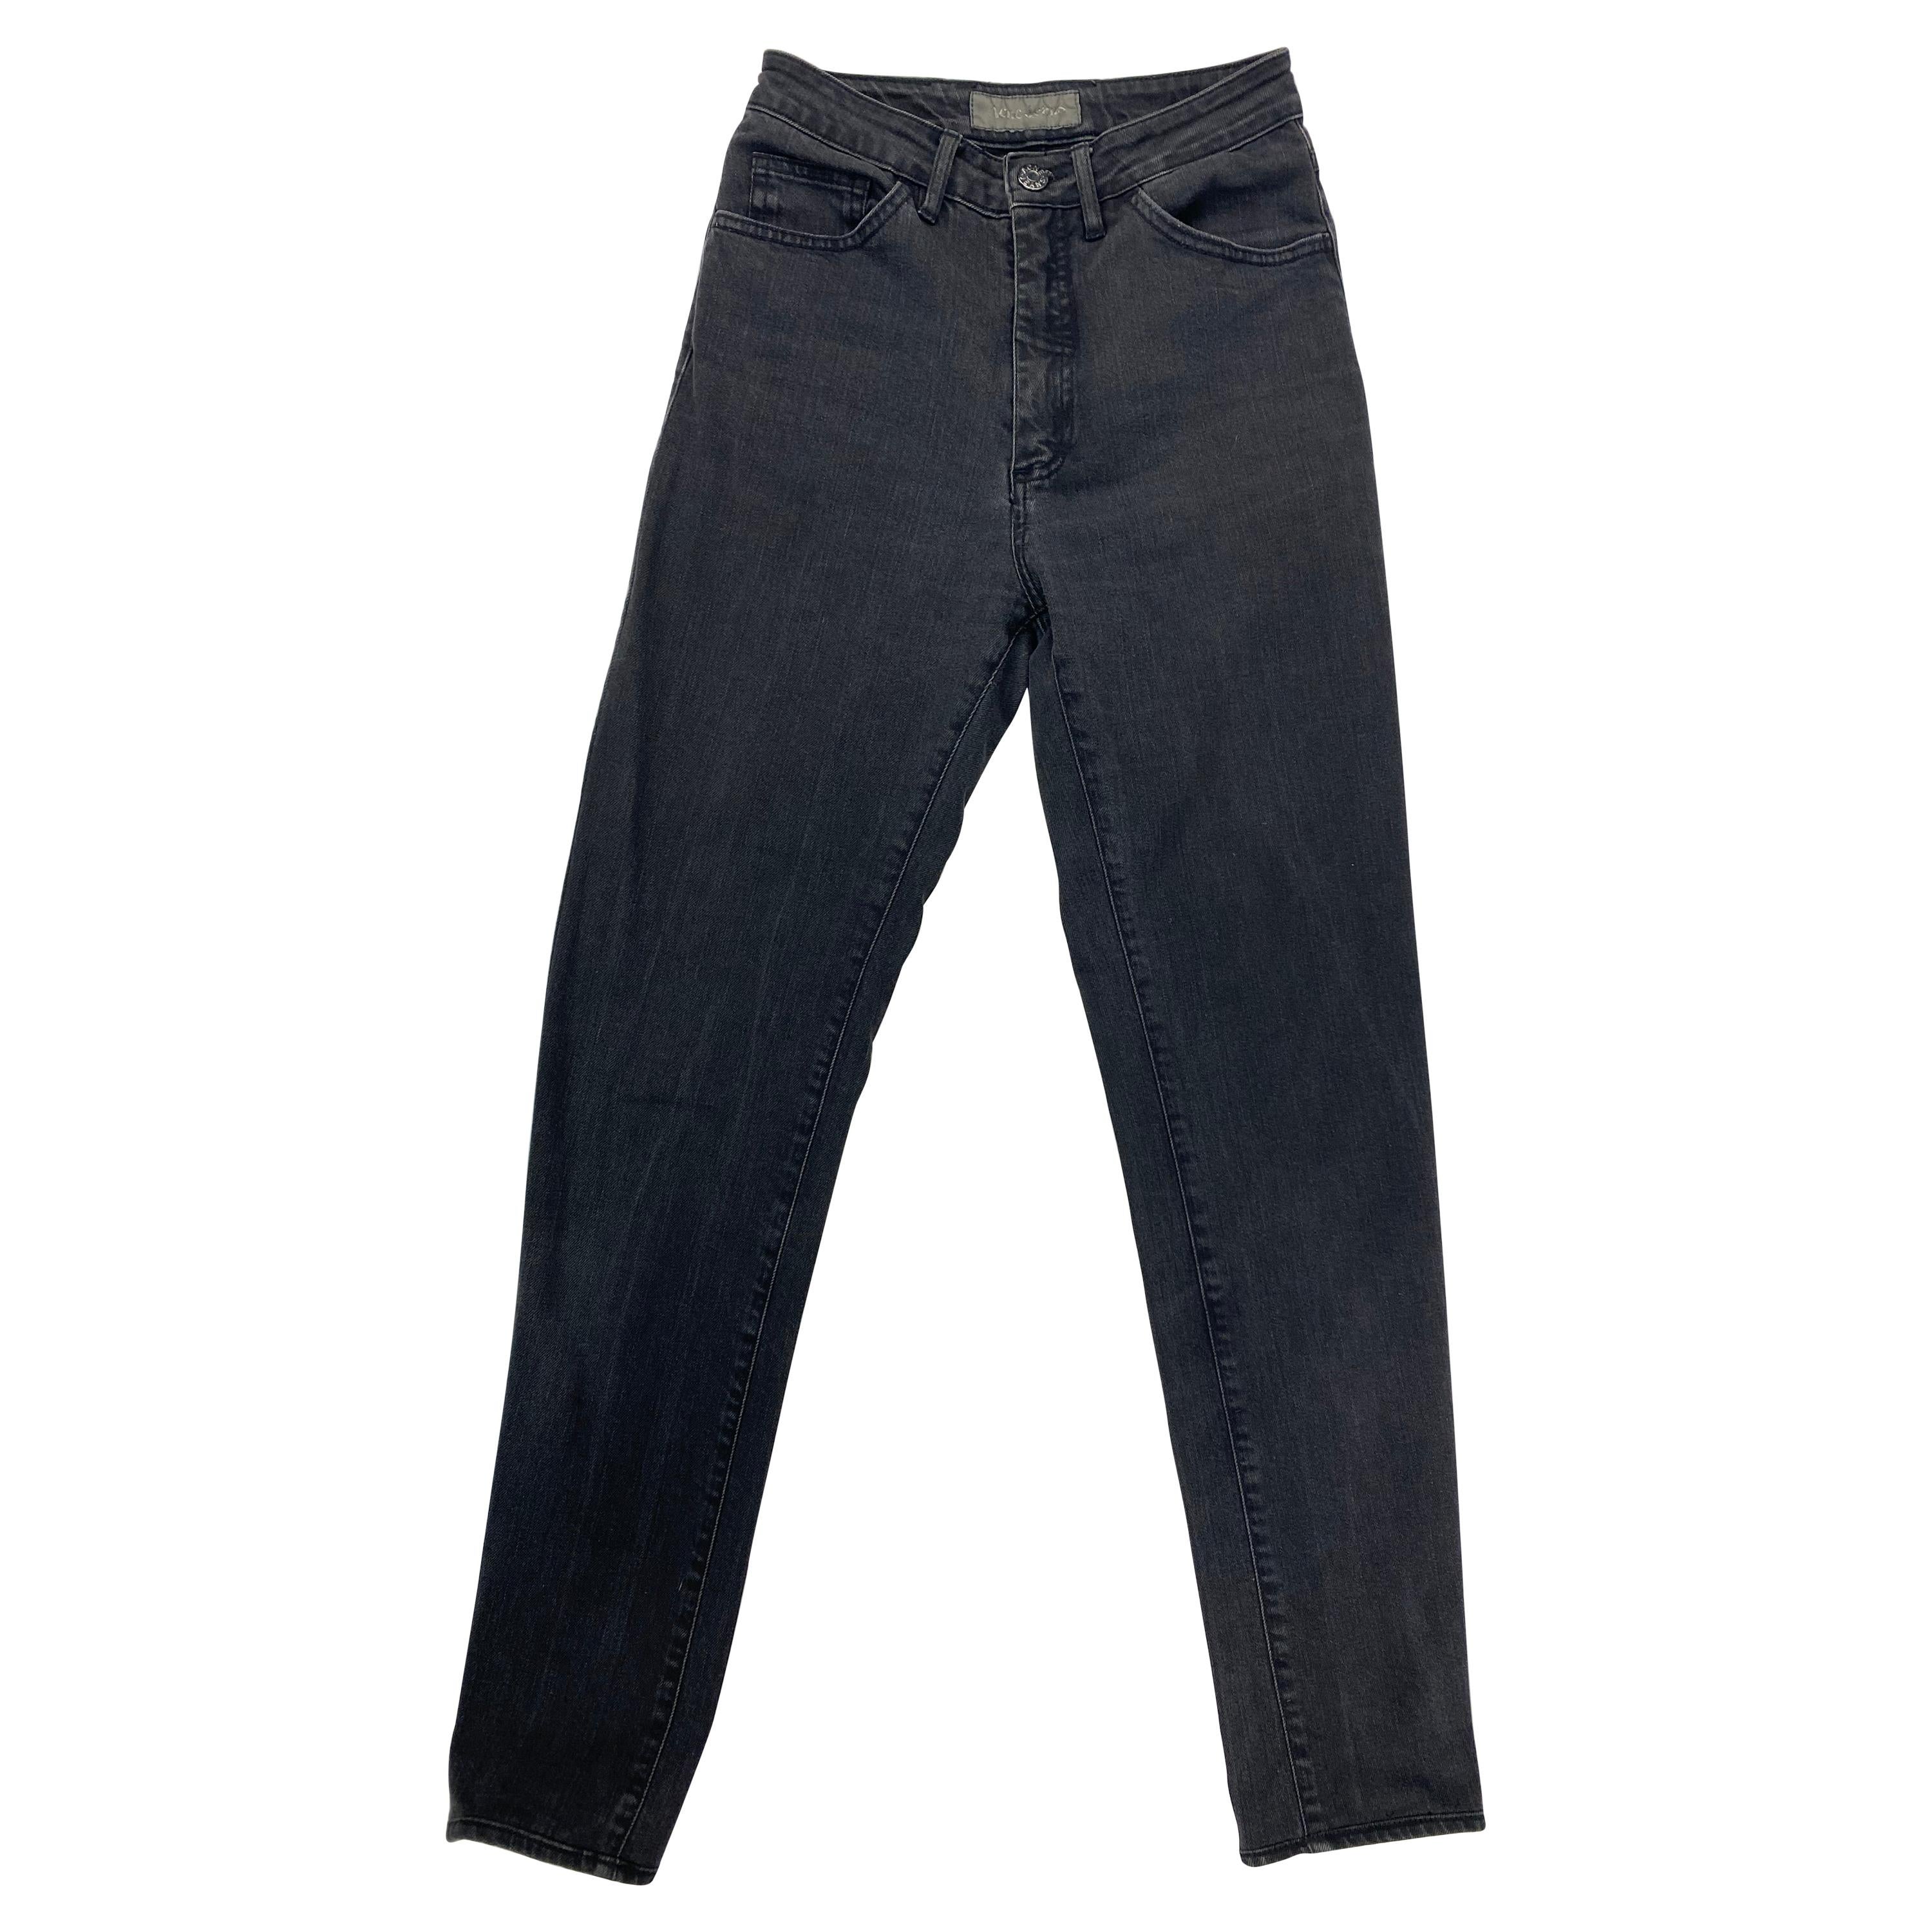 Acne Jeans Grey Skinny Denim Pants, Size 29/ 34 For Sale